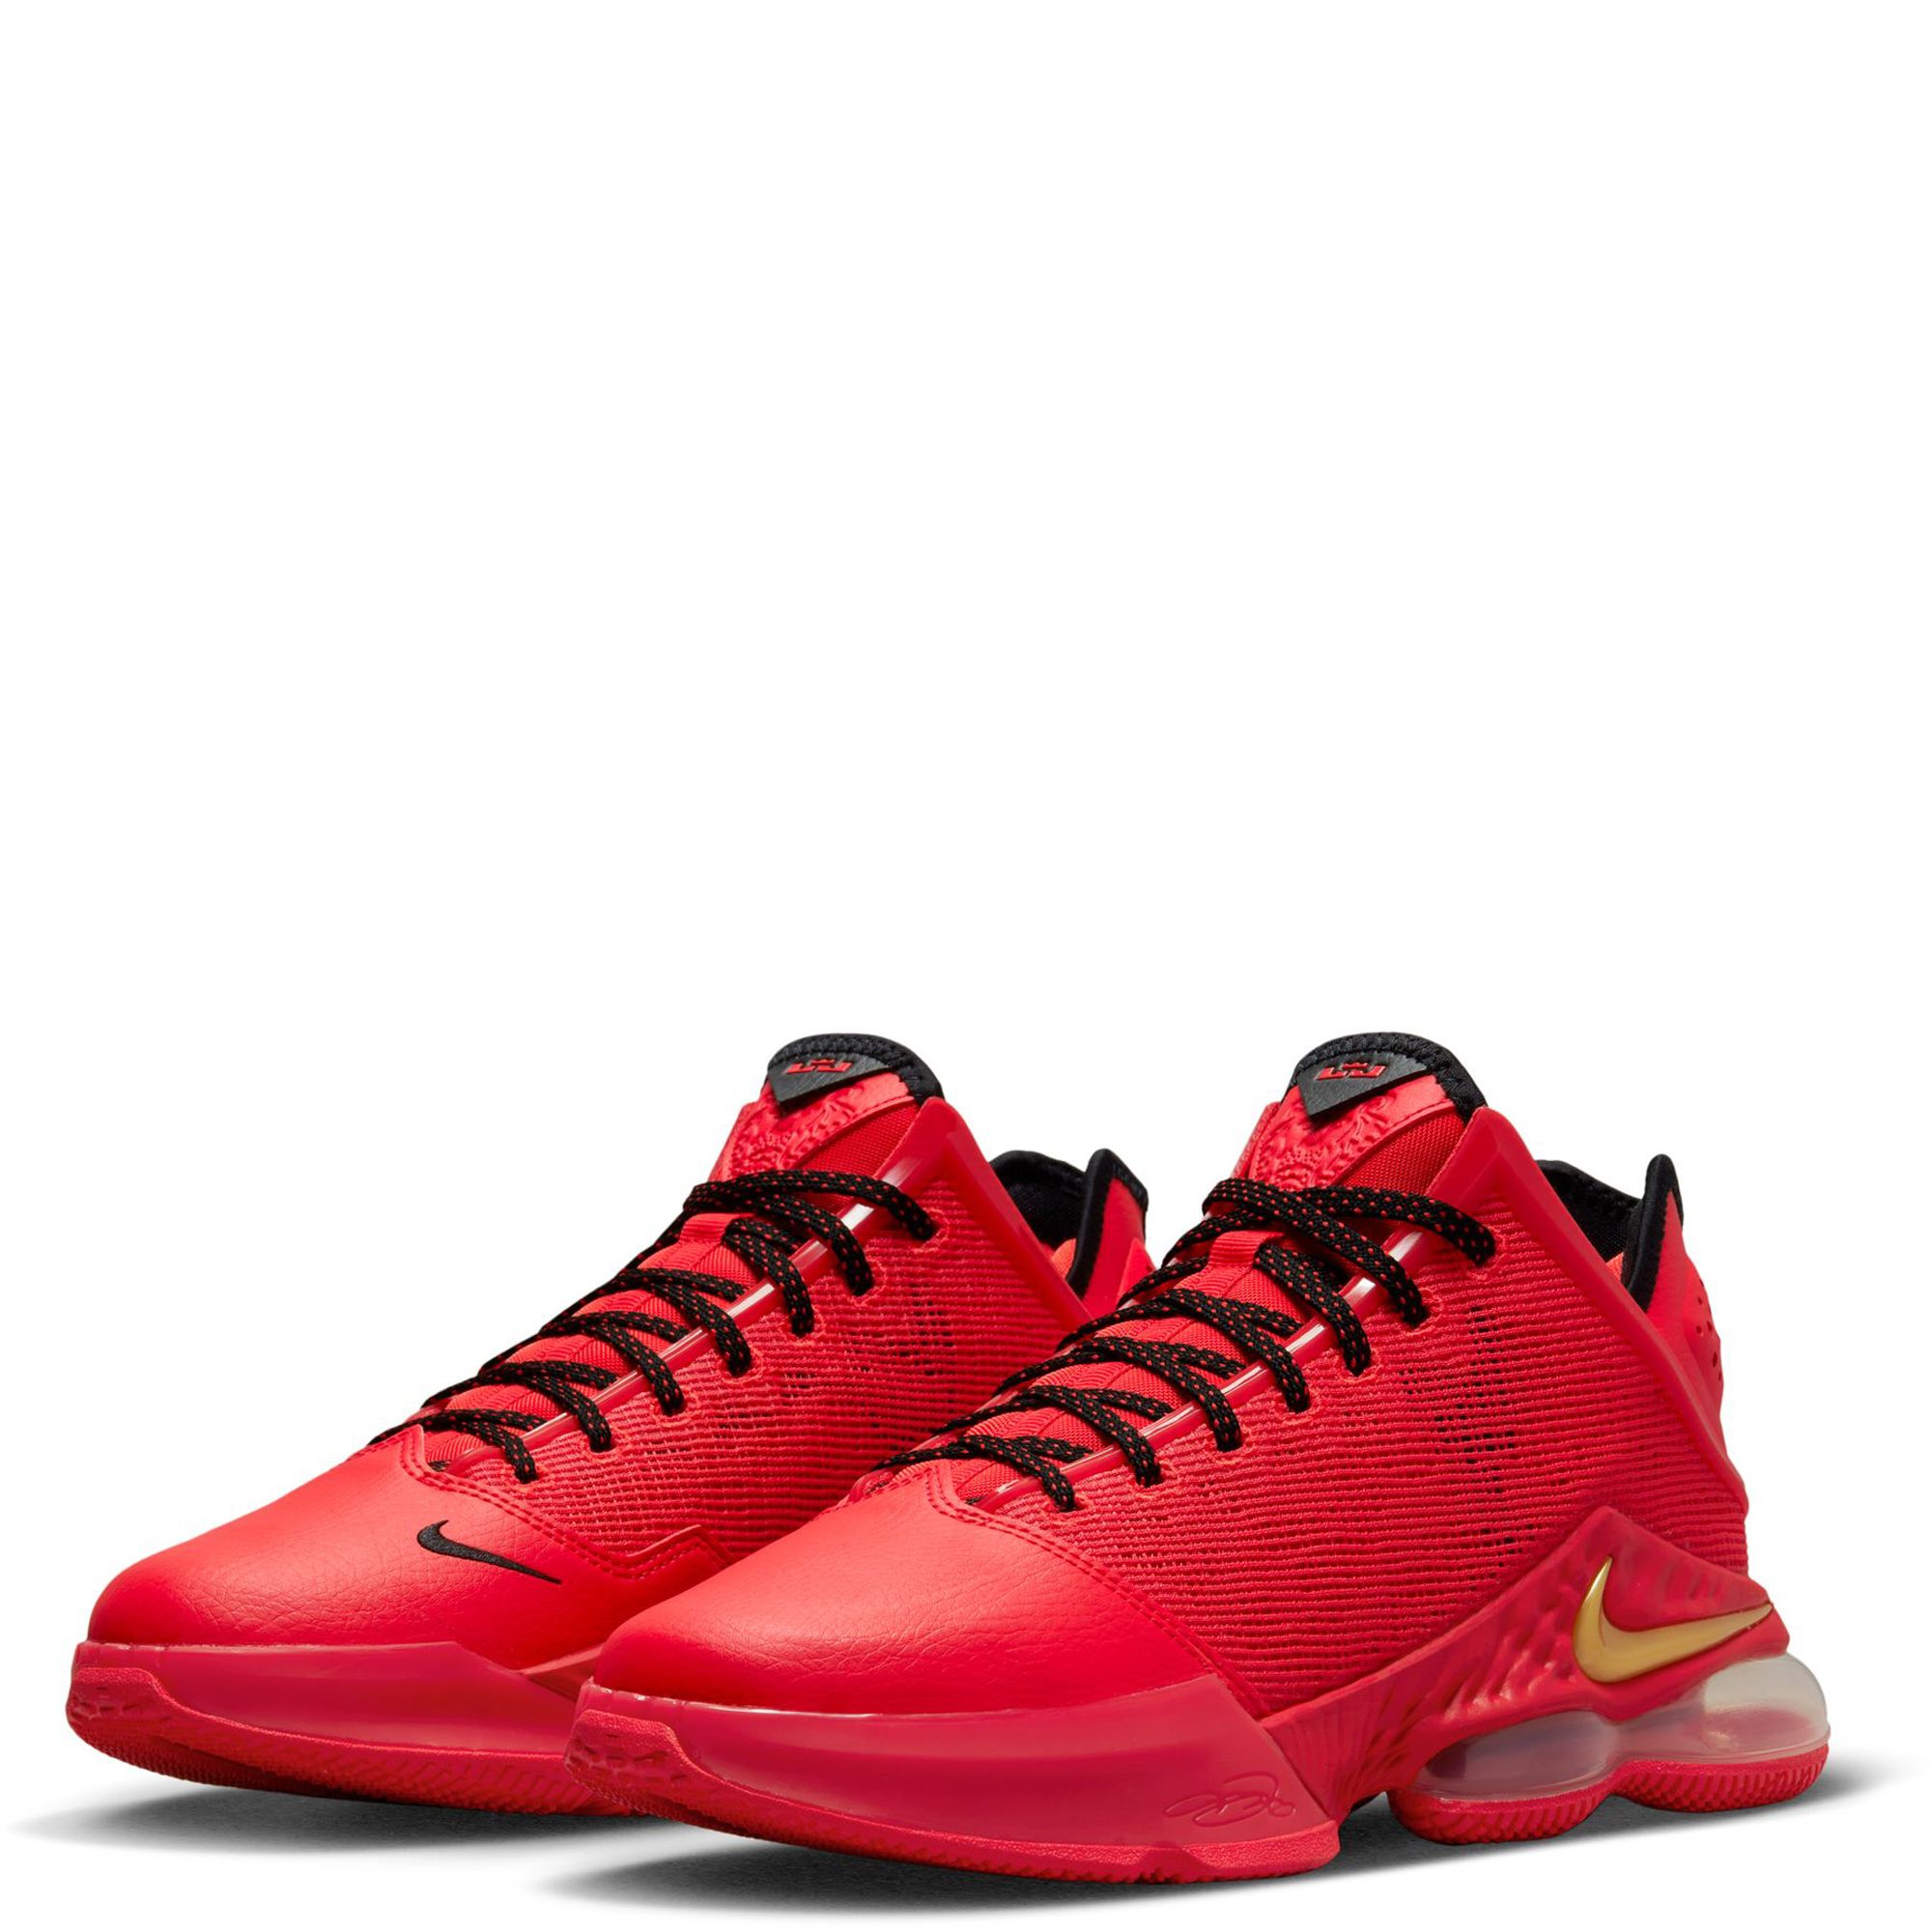 Nike LeBron 19 Low Light Crimson Basketball Shoes, Red/Black, Size: 9.5